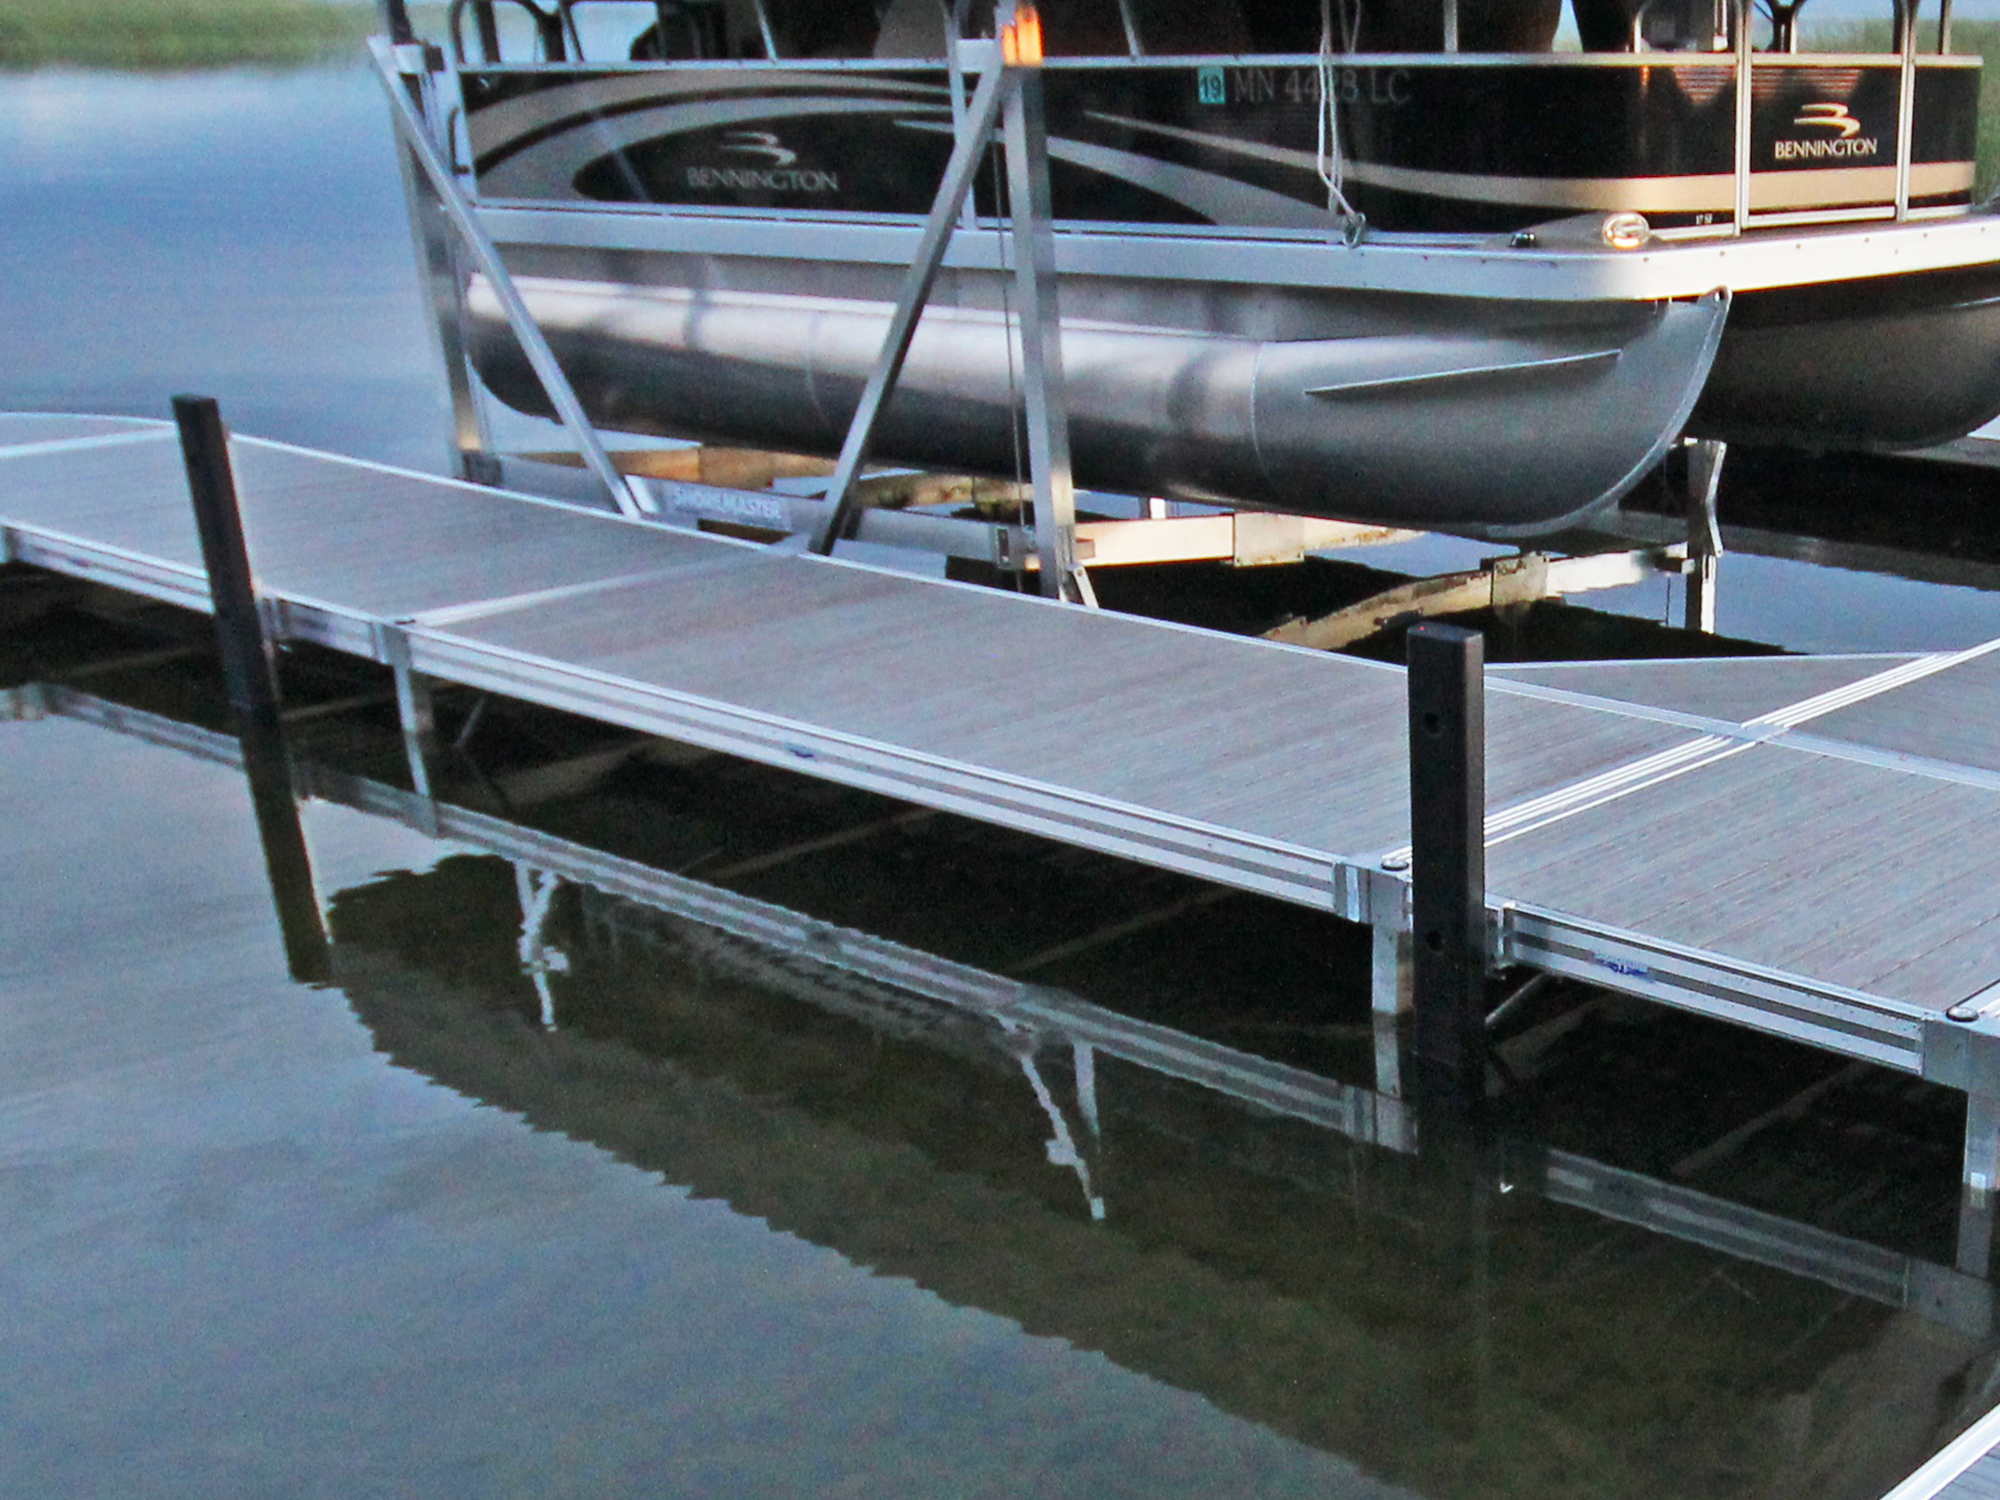 Vertical Dock Bumpers: Protective Vertical Boat Dock Bumpers